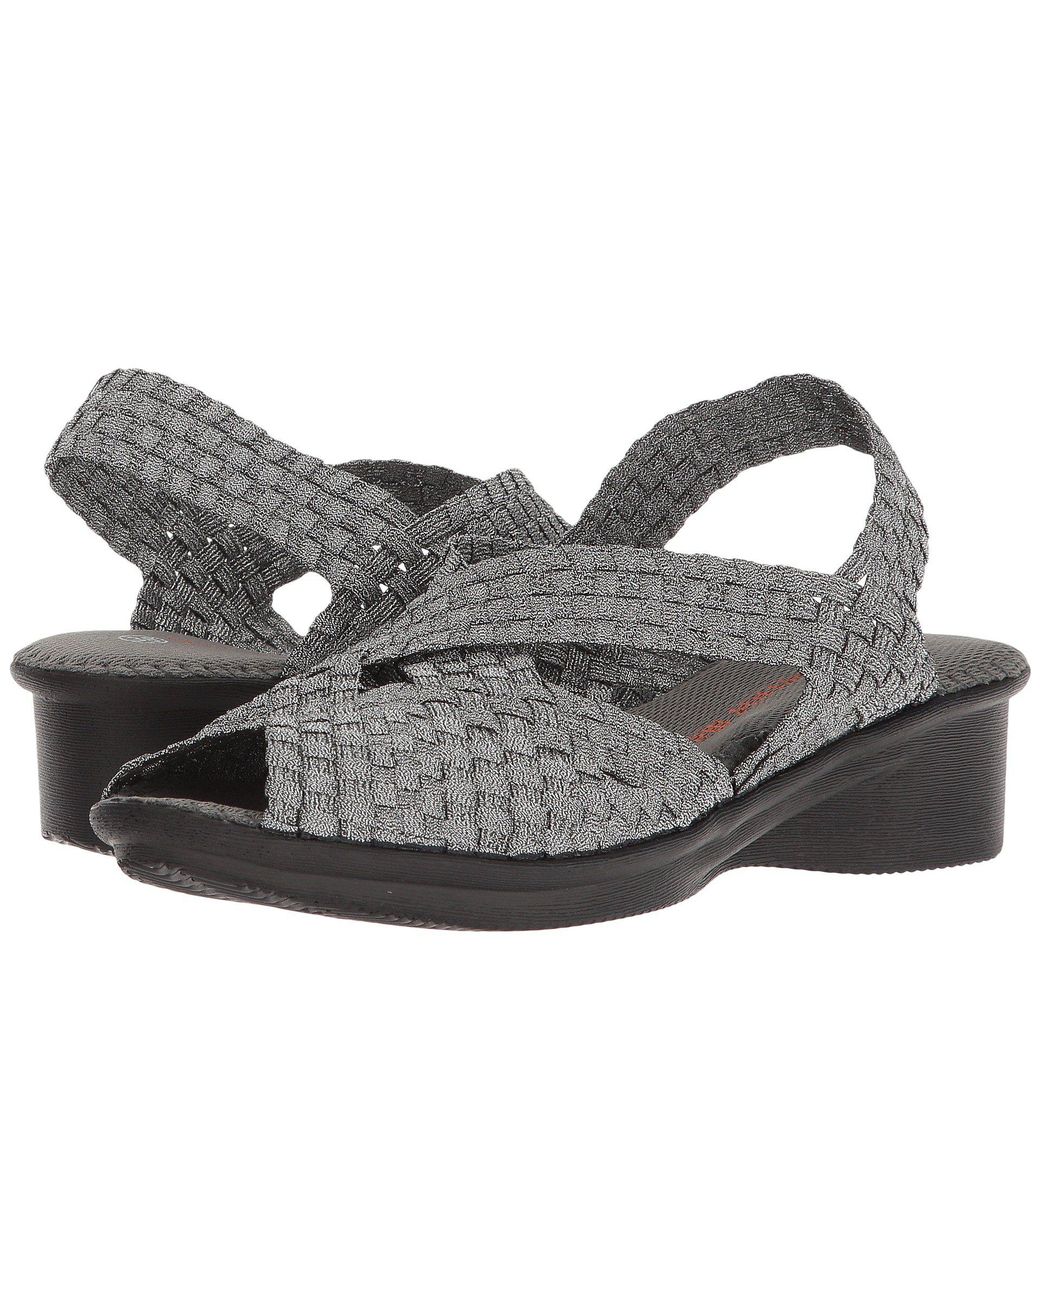 Women/'s Shoe Bernie Mev Kira Slingback Wedge Sandals NAVY  *New*